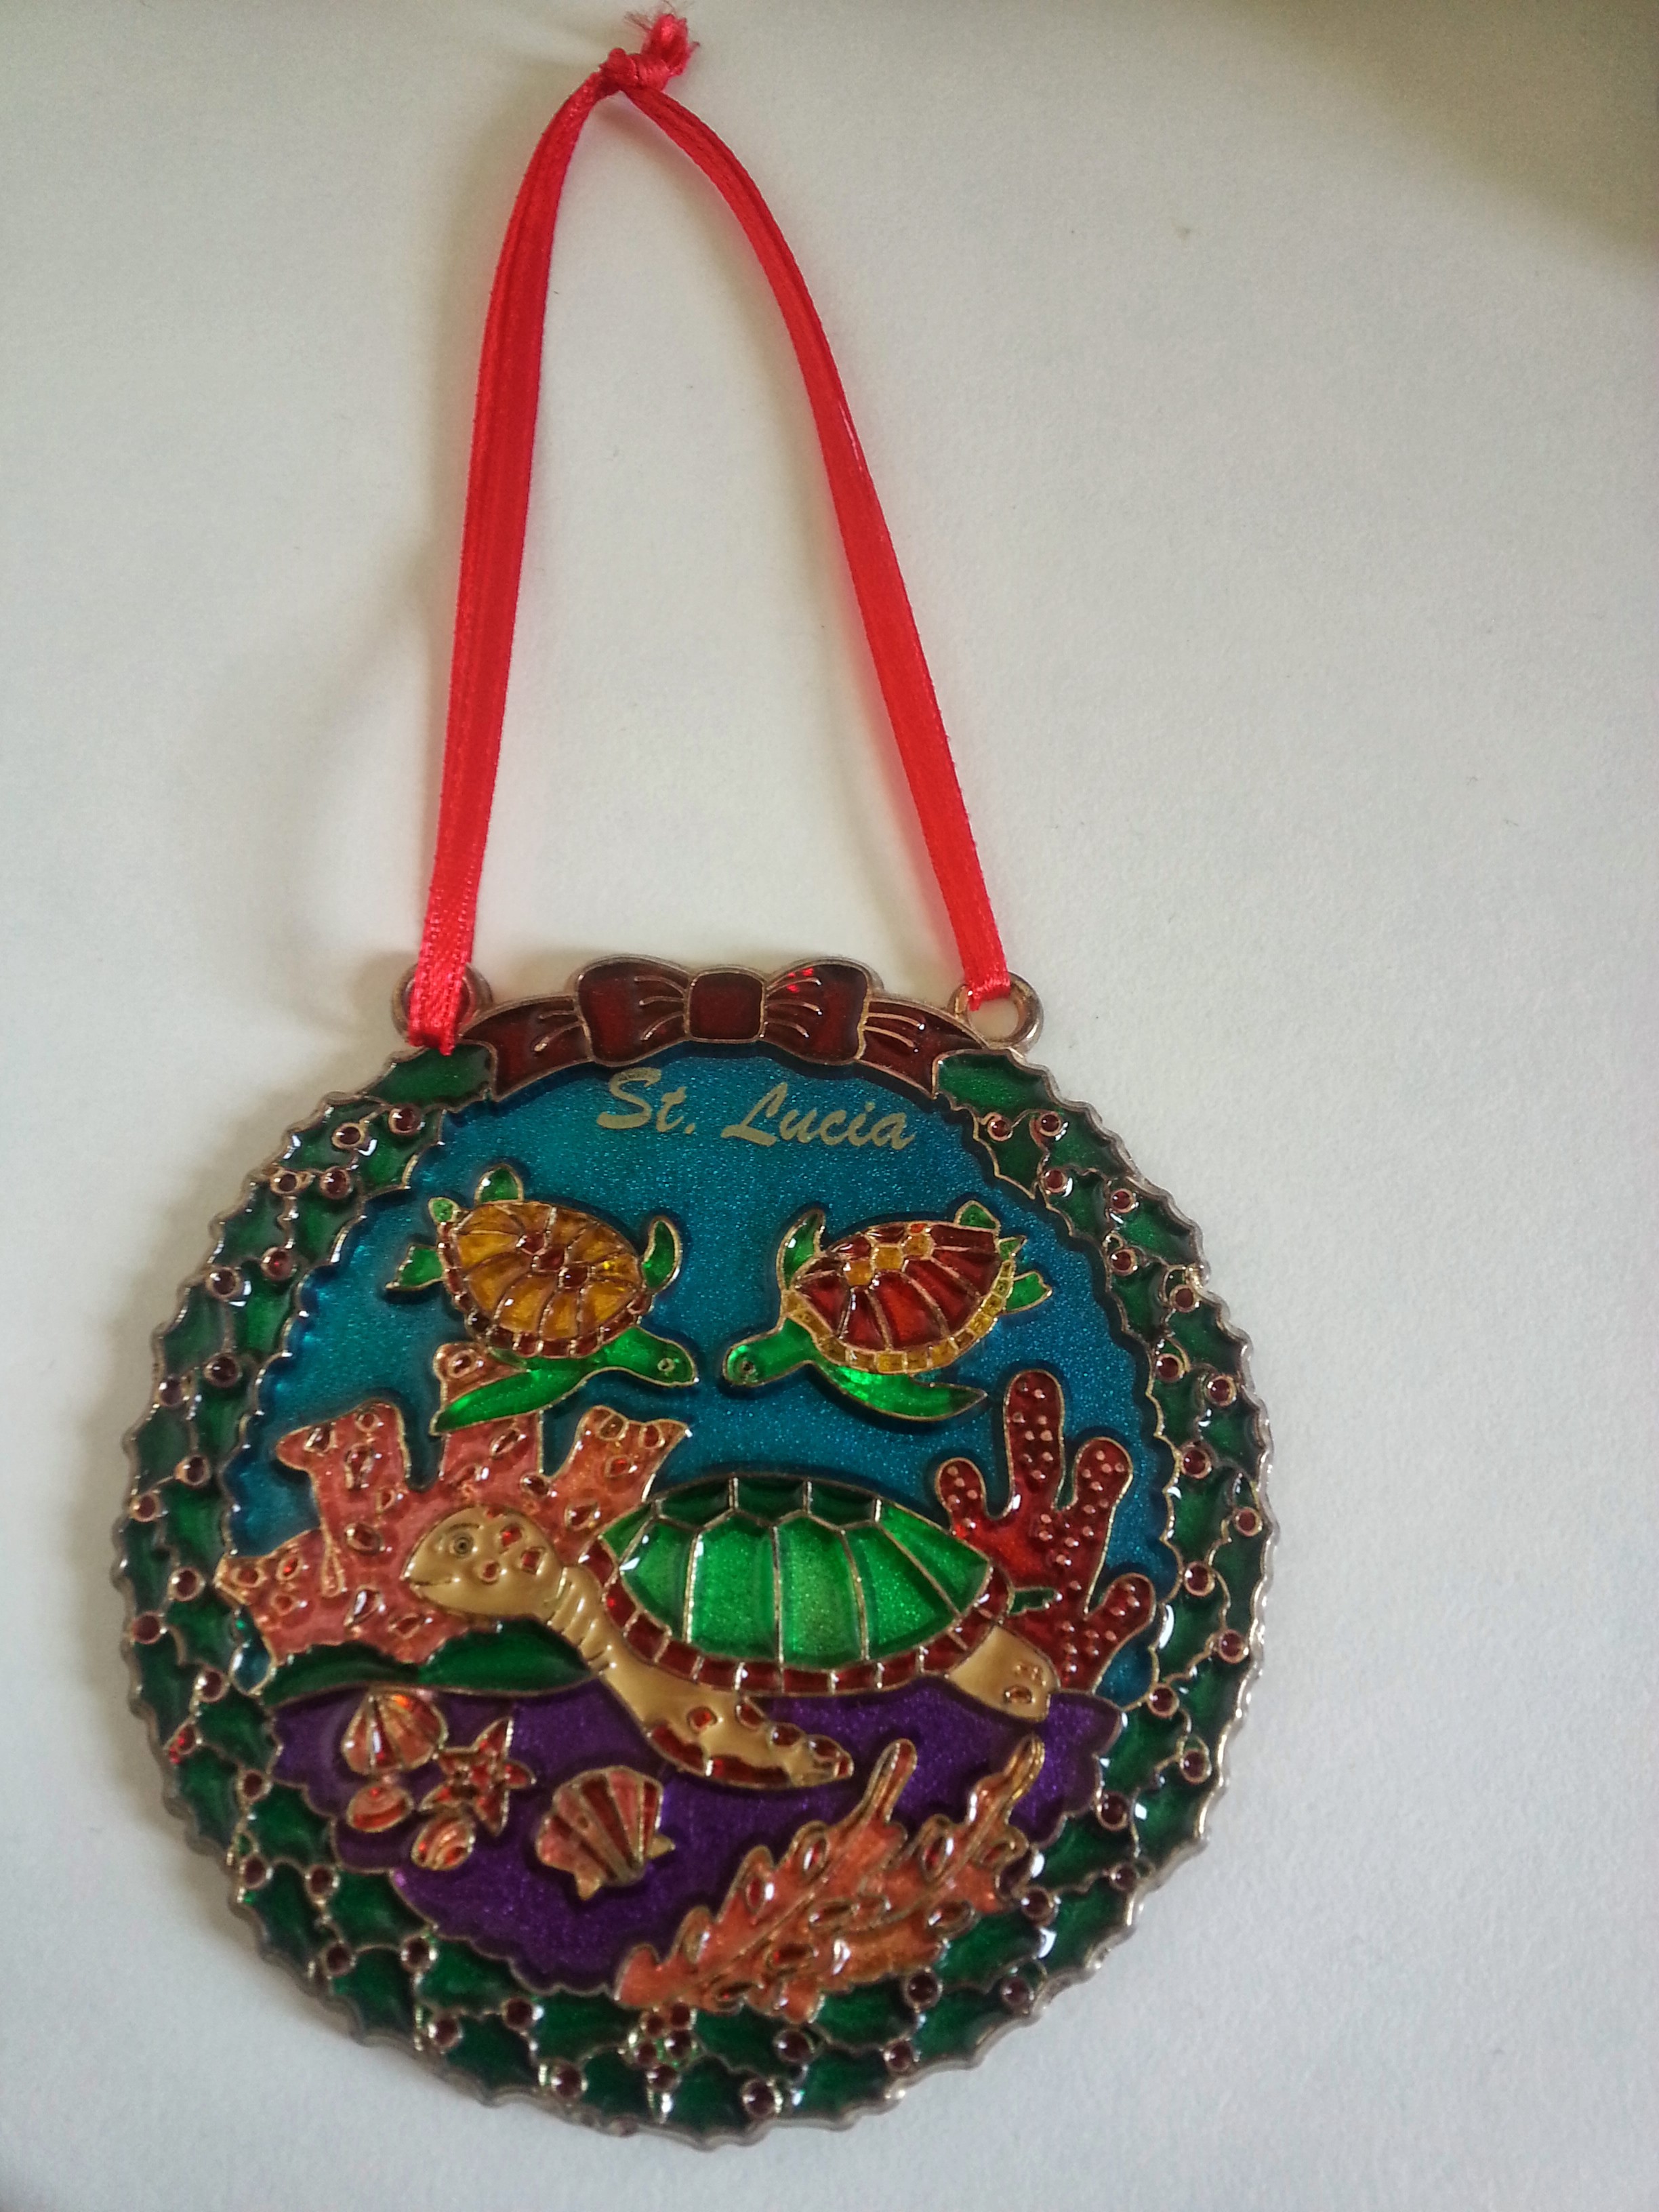 St Lucia Colorful Hand-Painted Souvenir, Sea Turtles & Scripture